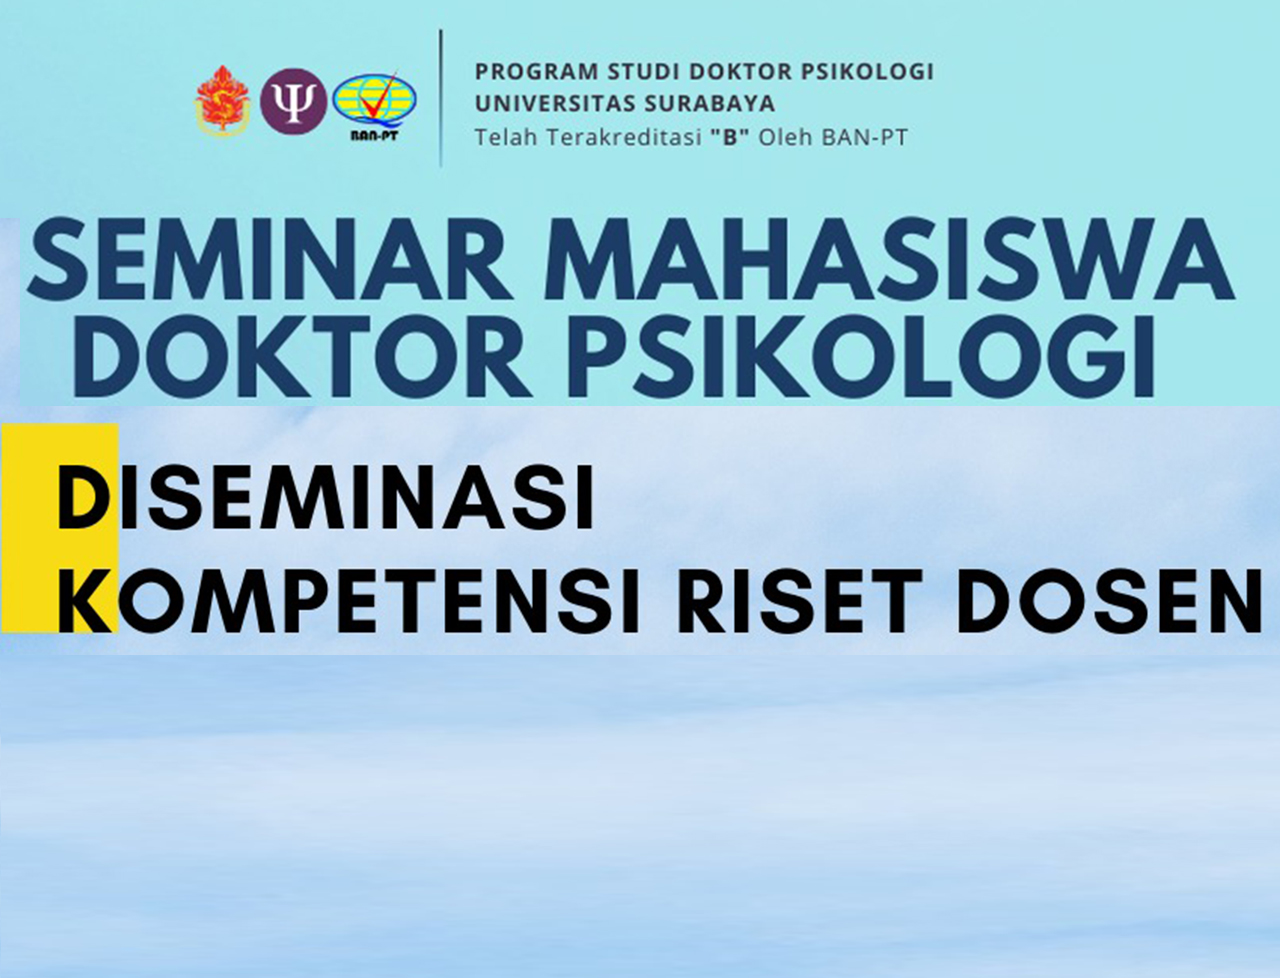 Seminar Mahasiswa Doktor Psikologi 2021